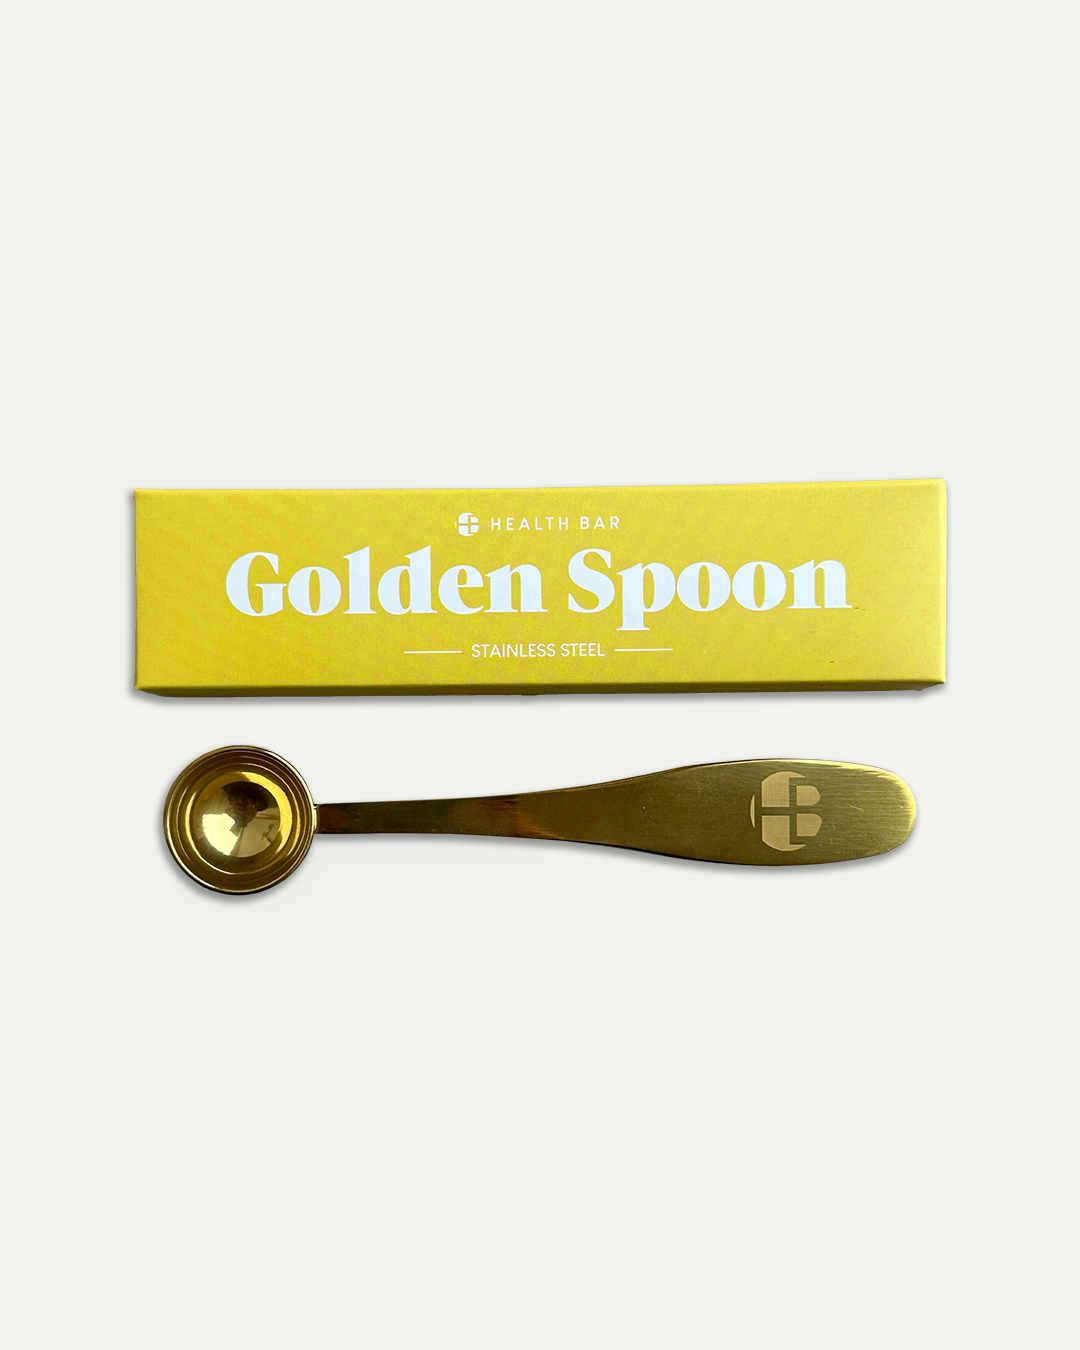 Matcha Golden Spoon